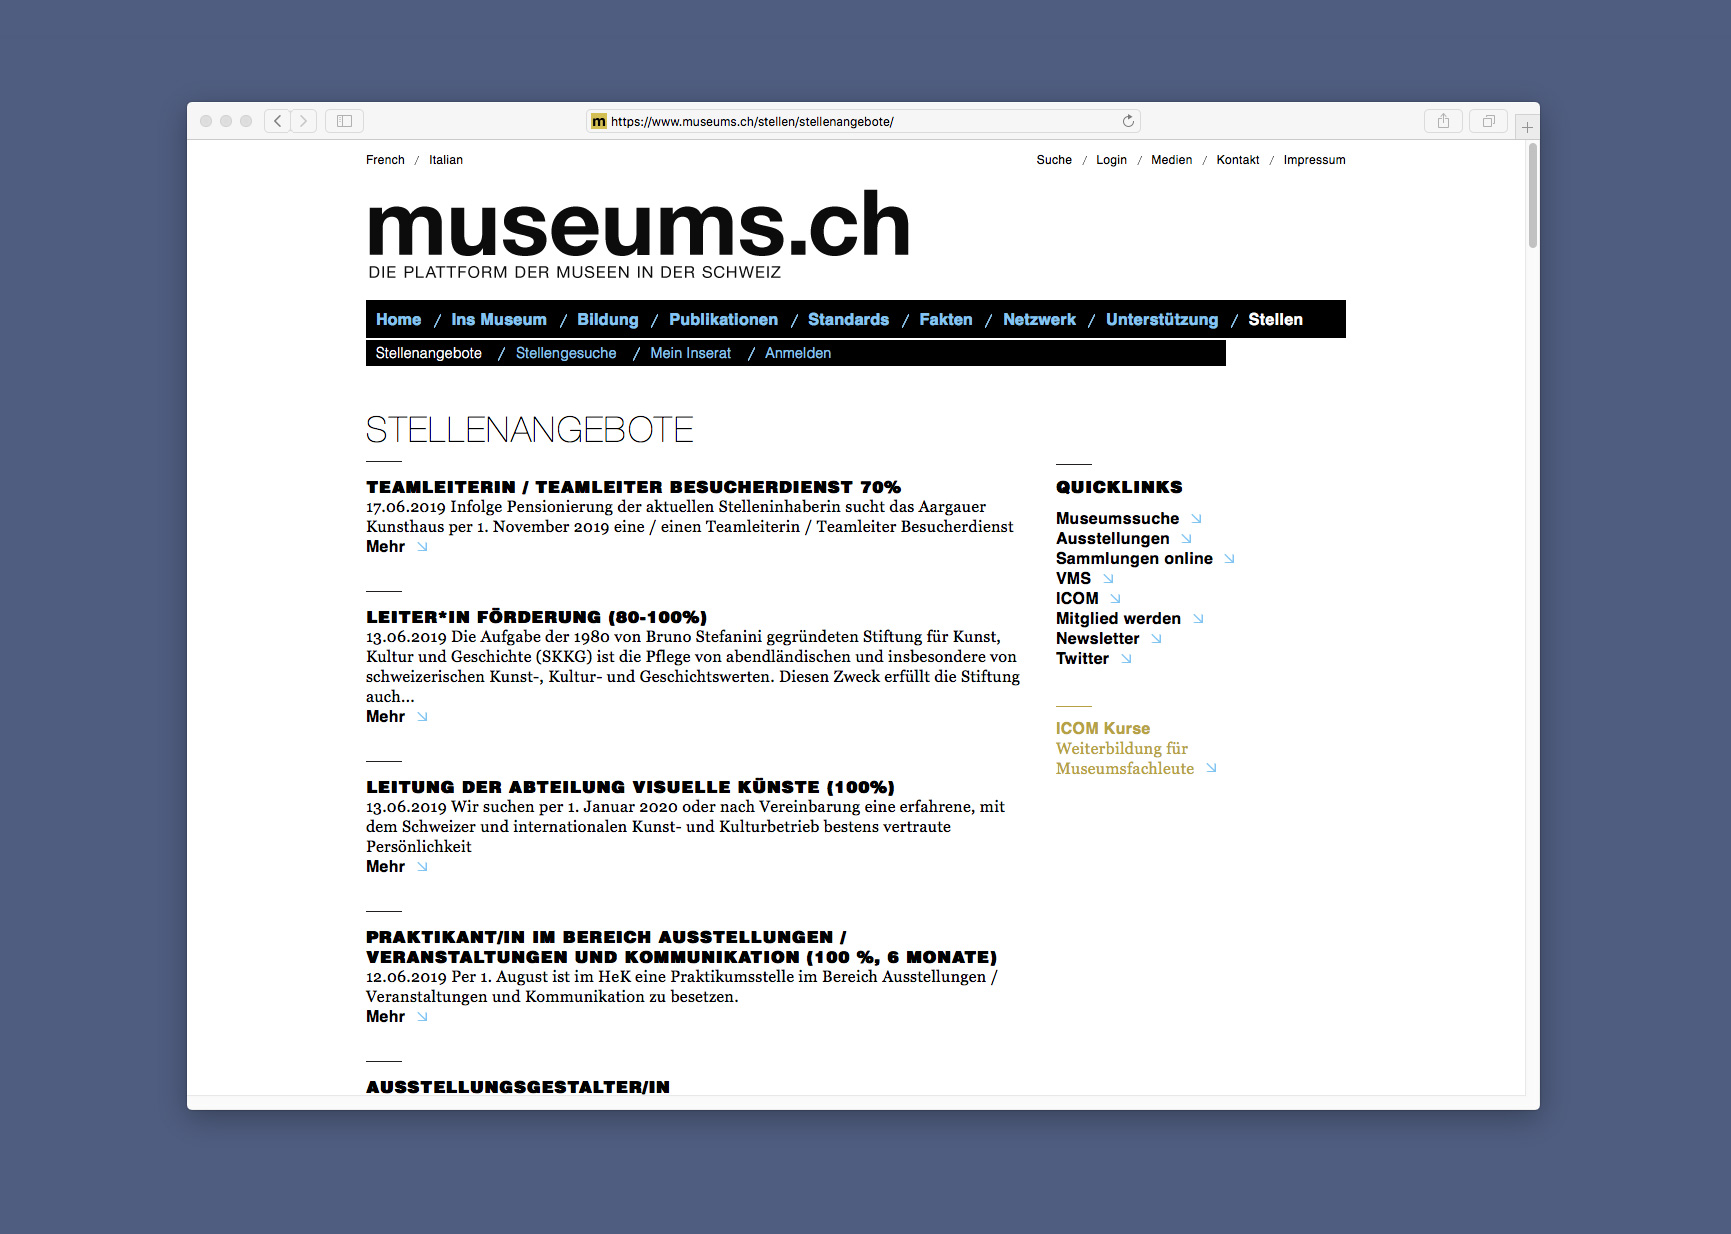 Bossard Wettstein Project - museums.ch - Website